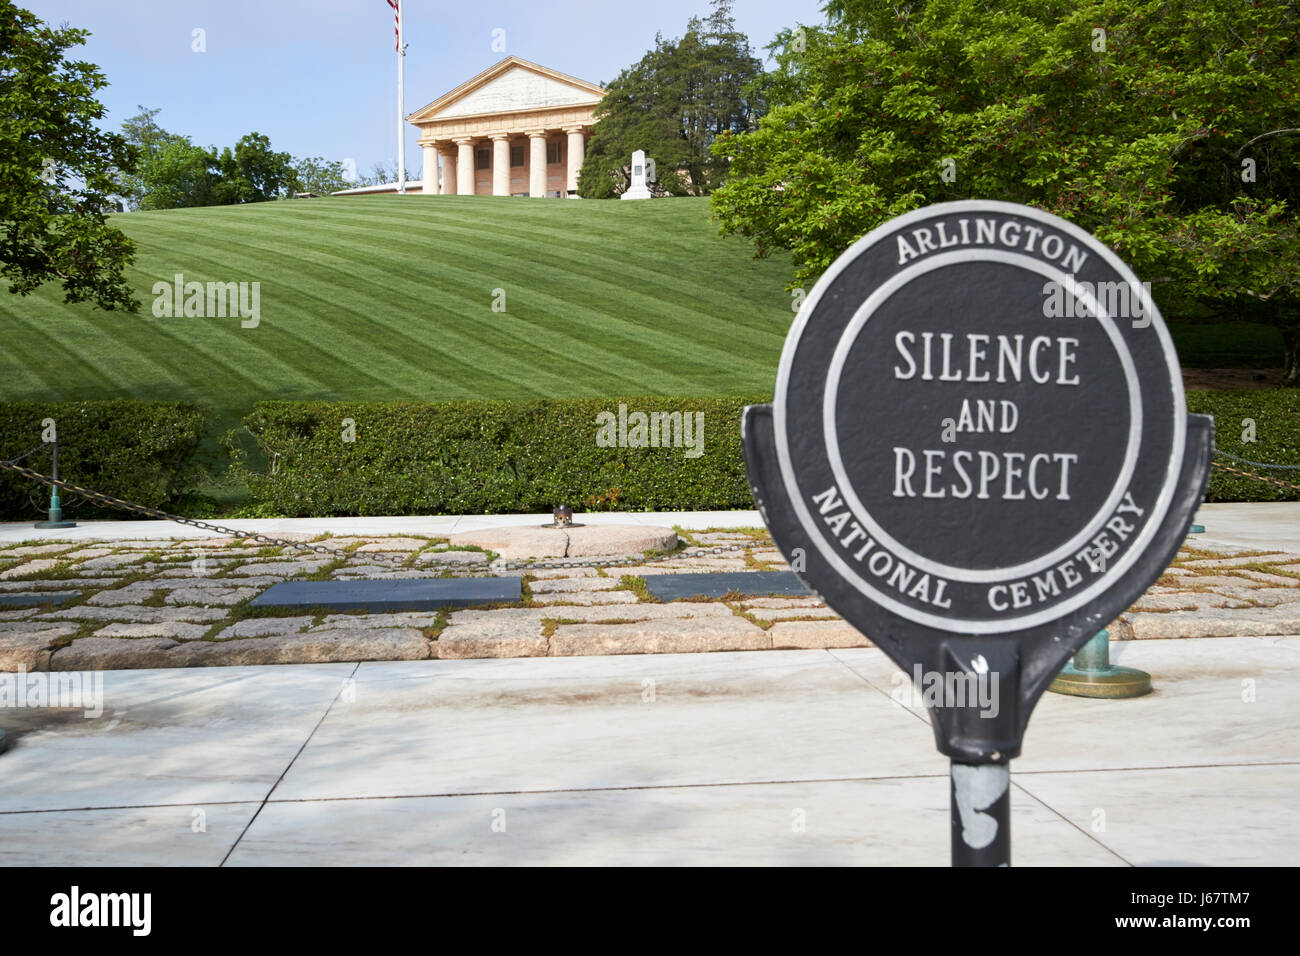 silence and respect sign in front of jfk John F, Kennedy gravesite and arlington house arlington cemetery Washington DC USA Stock Photo